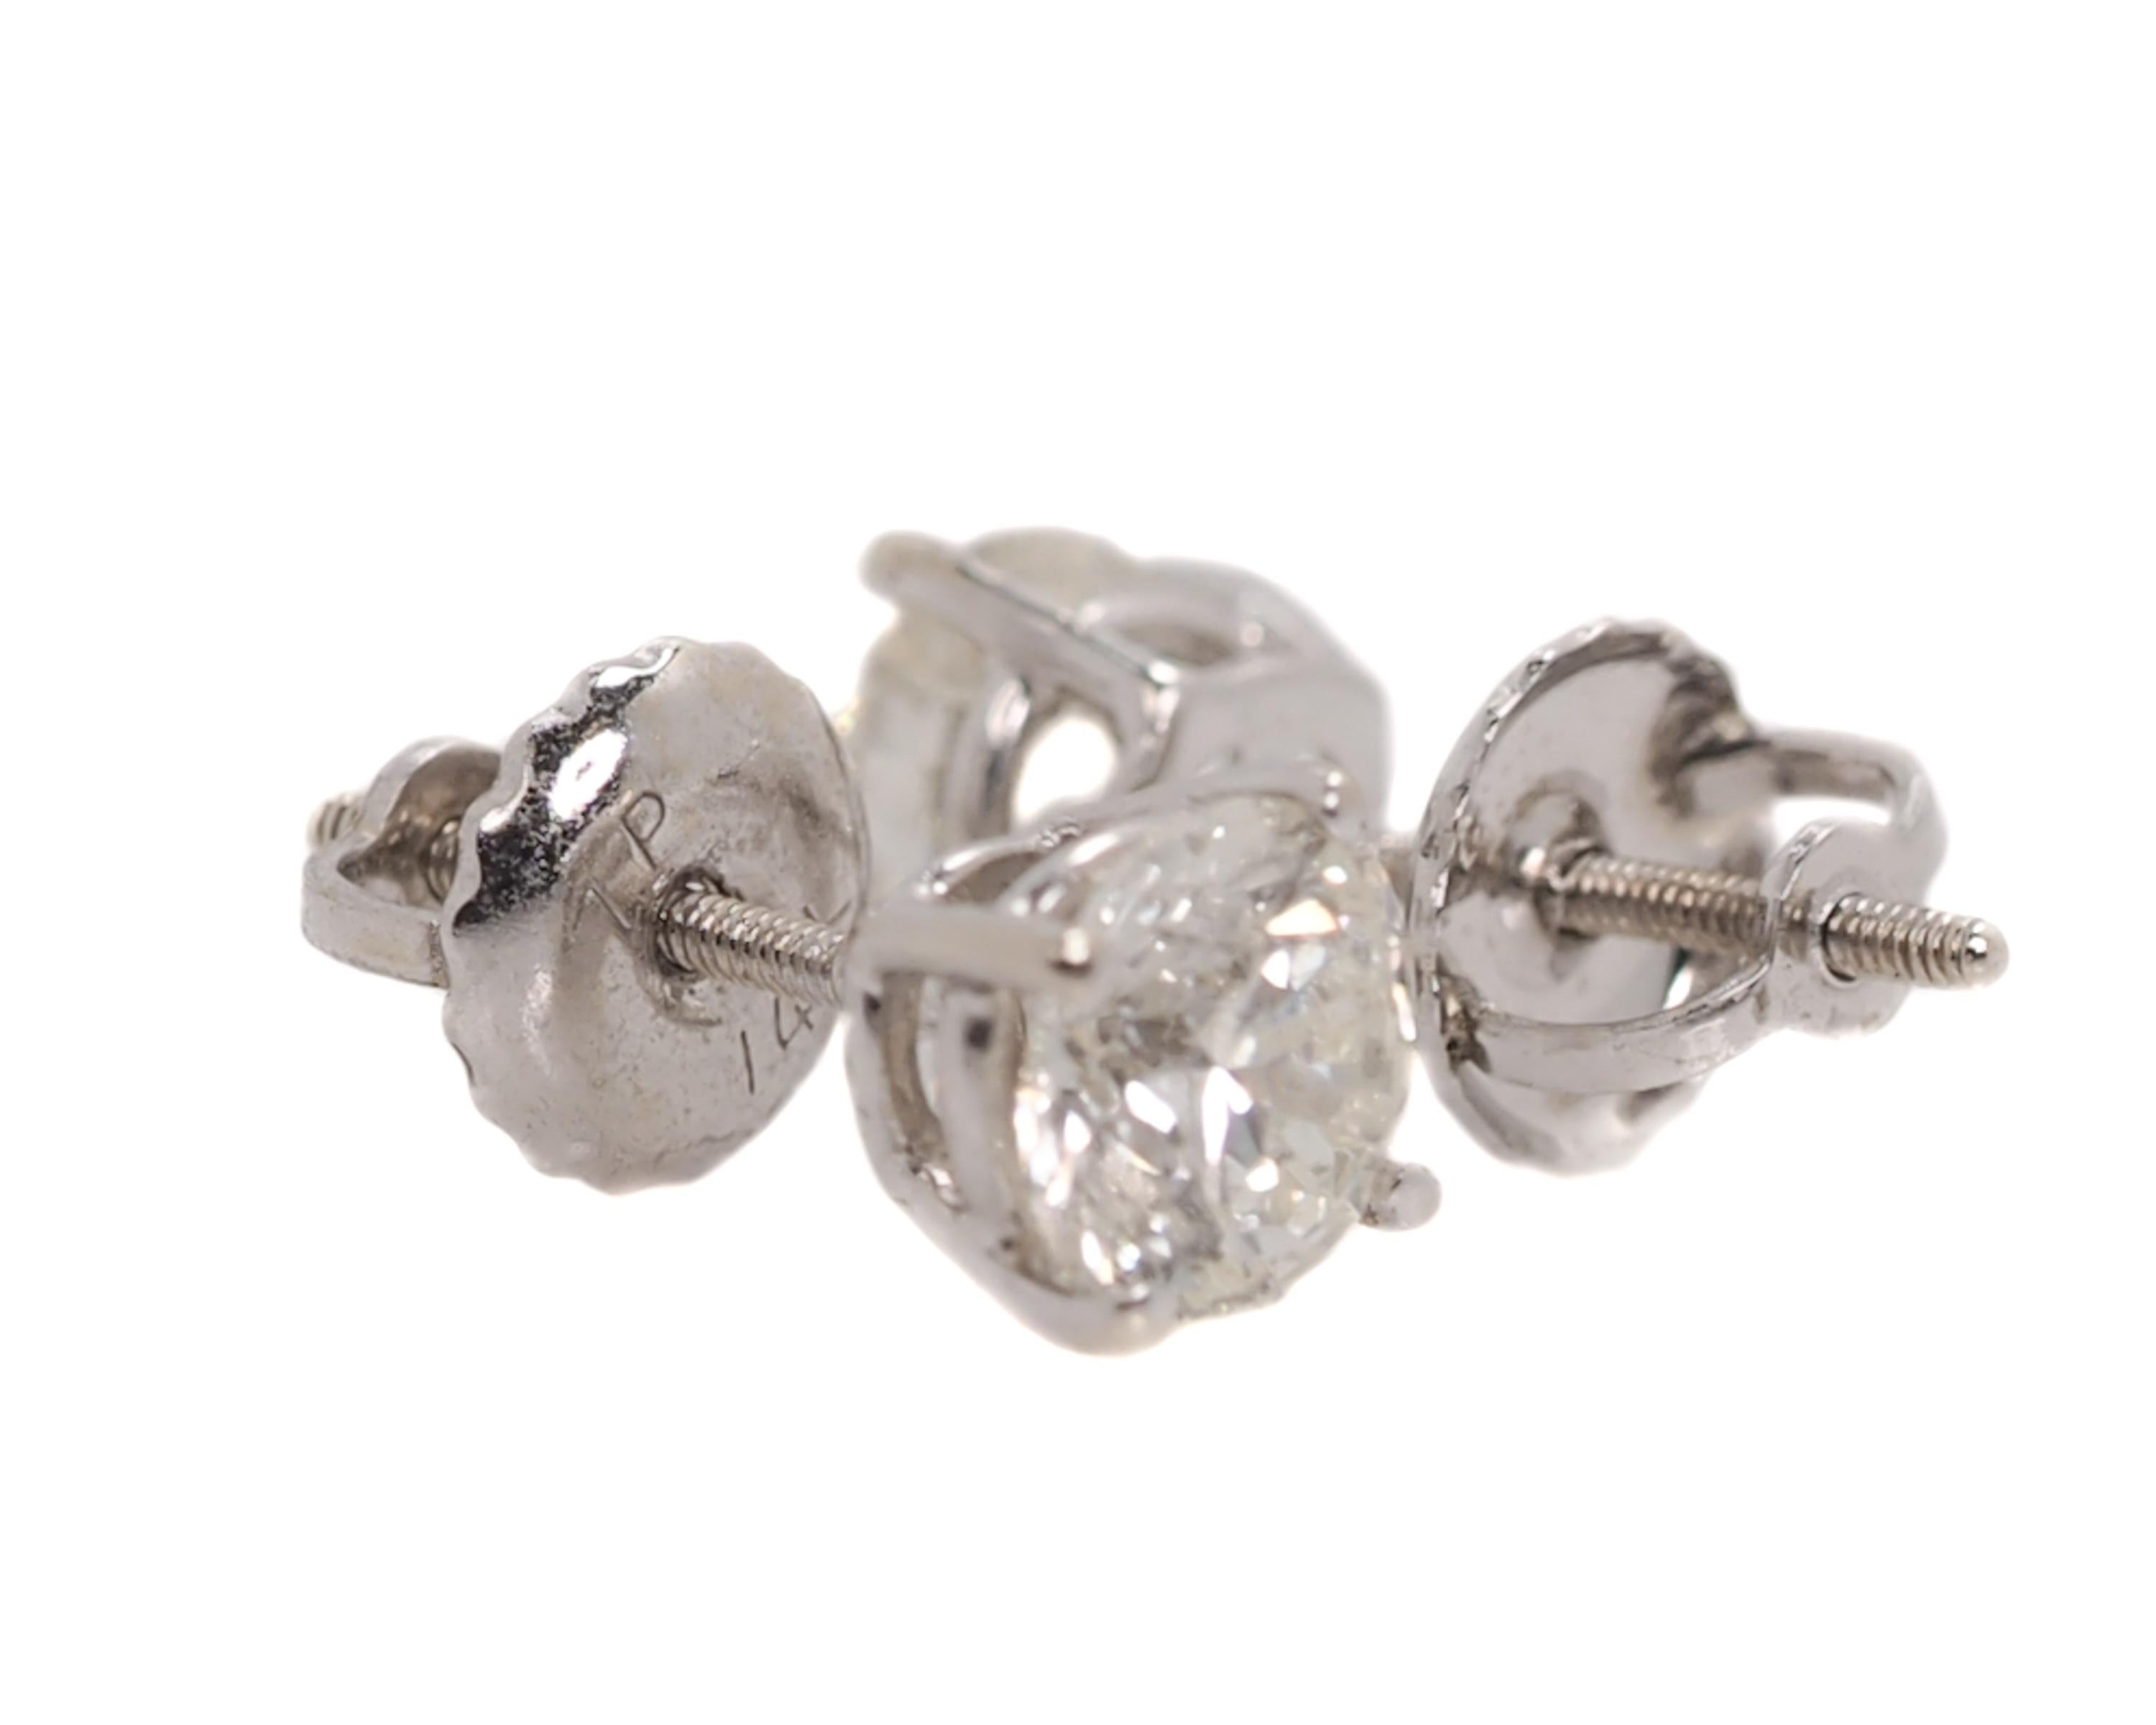 5mm diamond stud earrings